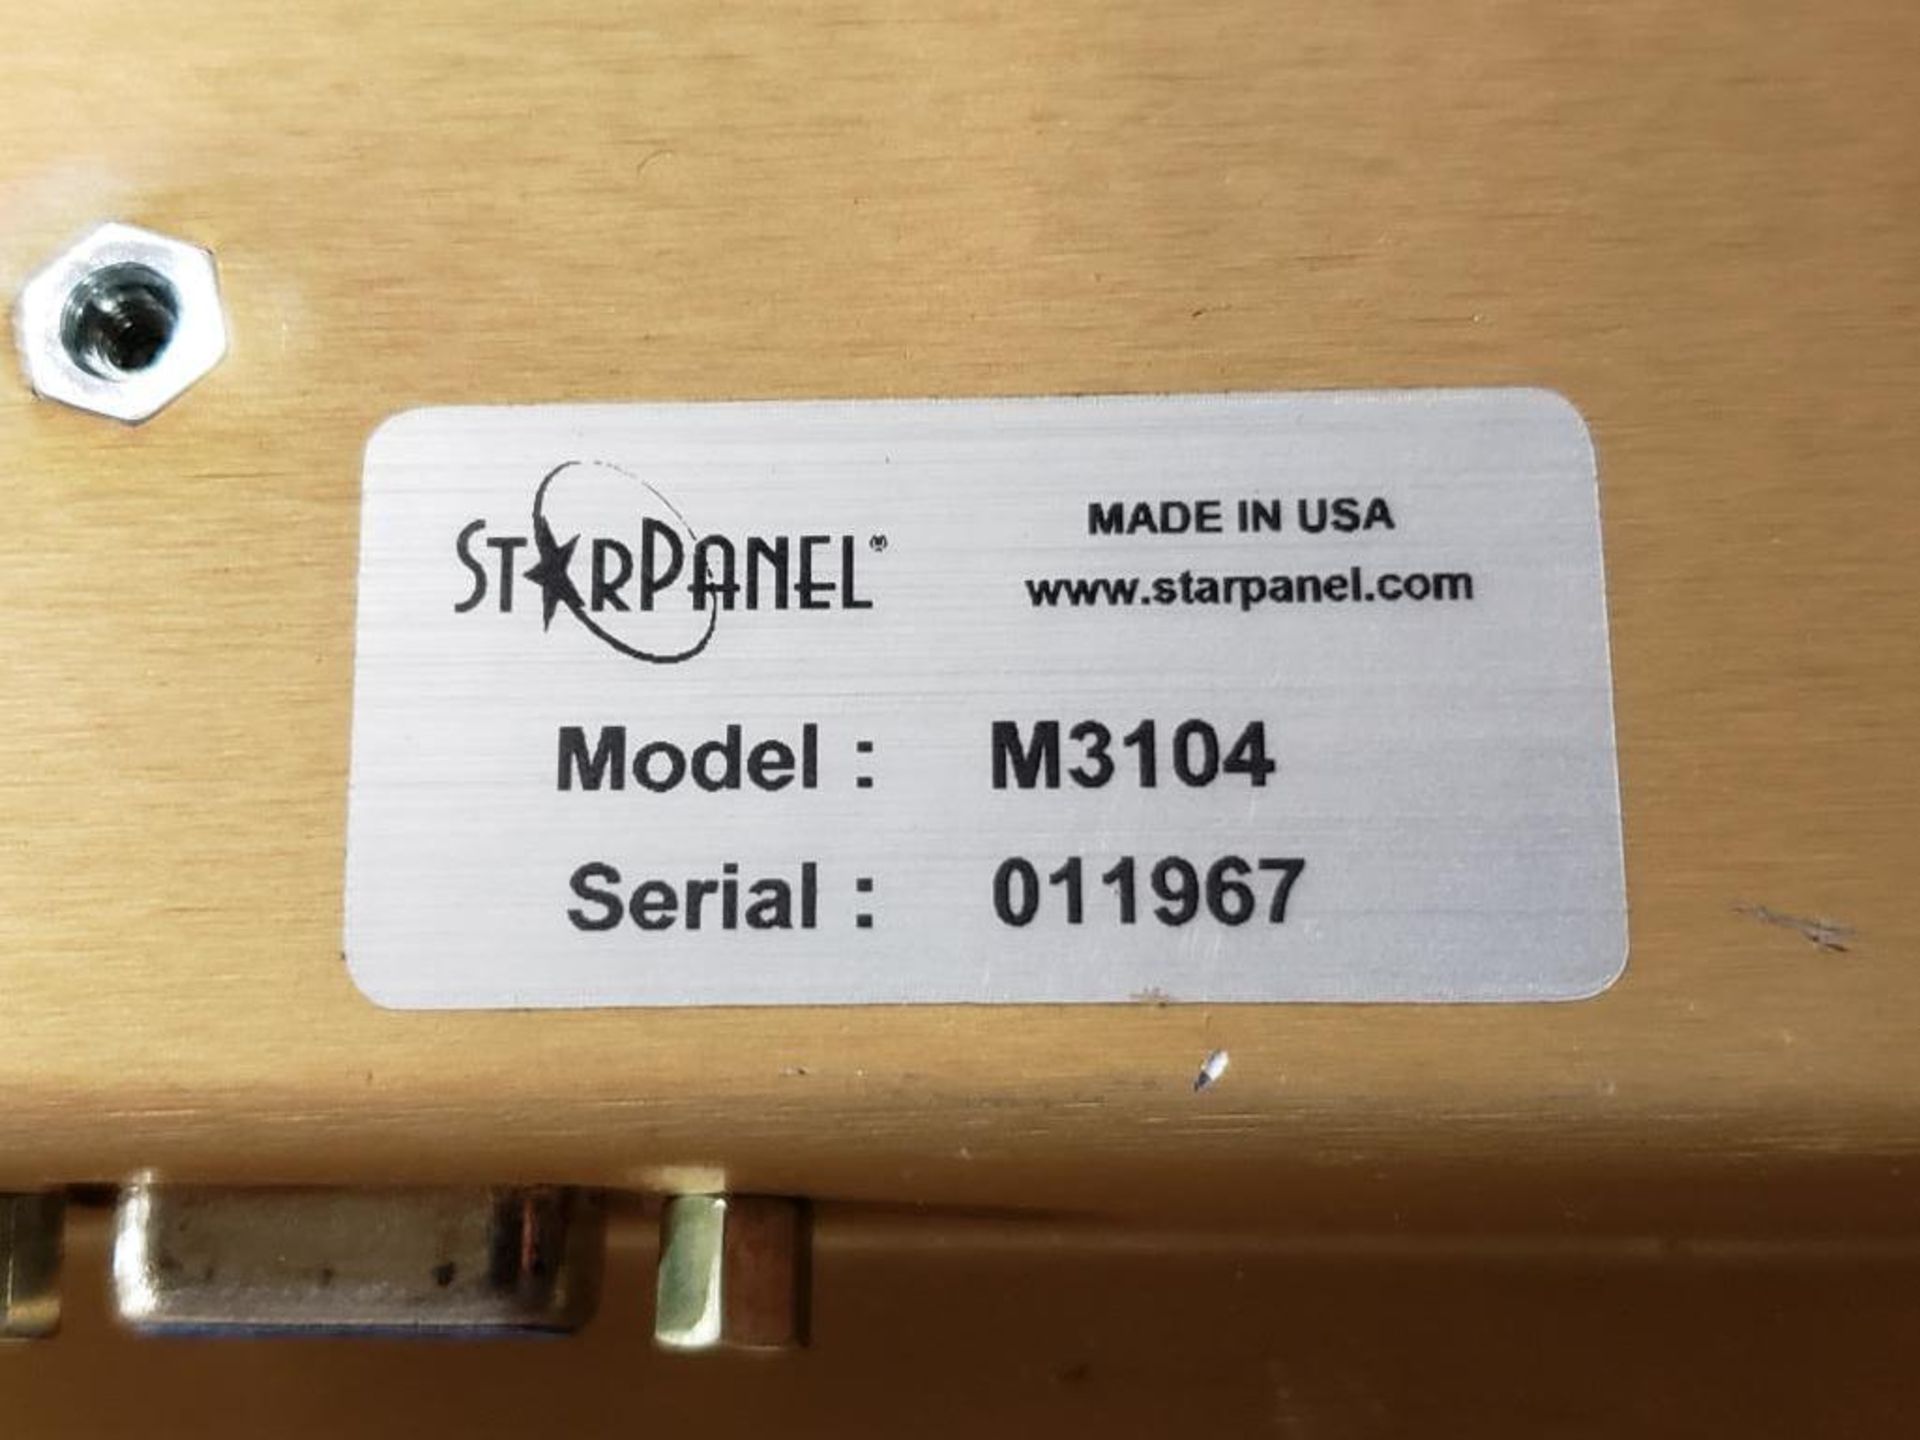 Starpanel user interface panel model M3104. - Image 2 of 2